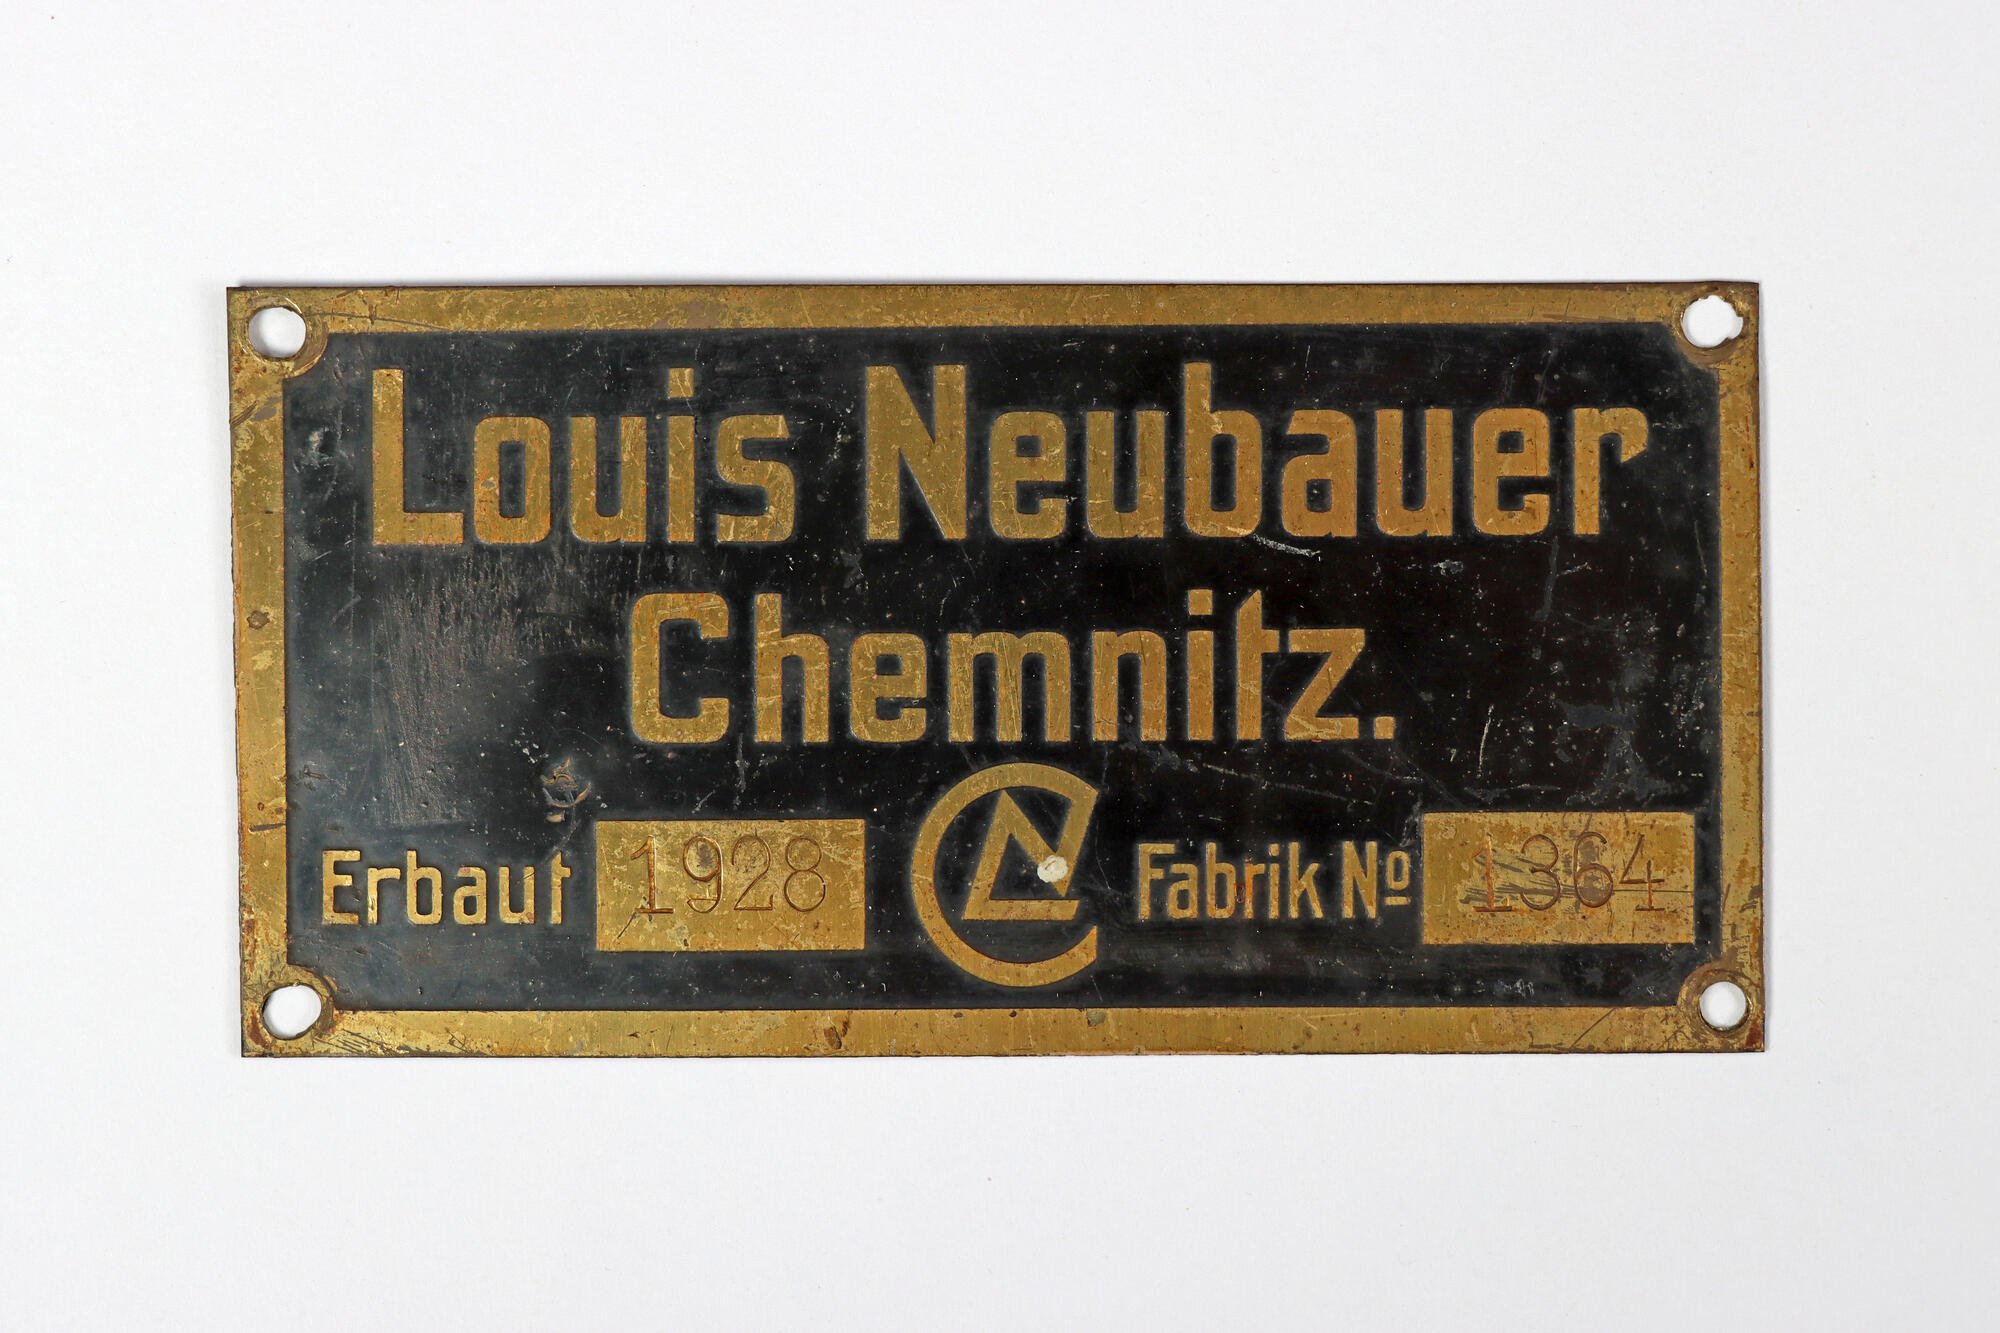 Maschinenschild, Front (Industriemuseum Chemnitz; Fotografin: Marion Kaiser CC BY-NC-SA)